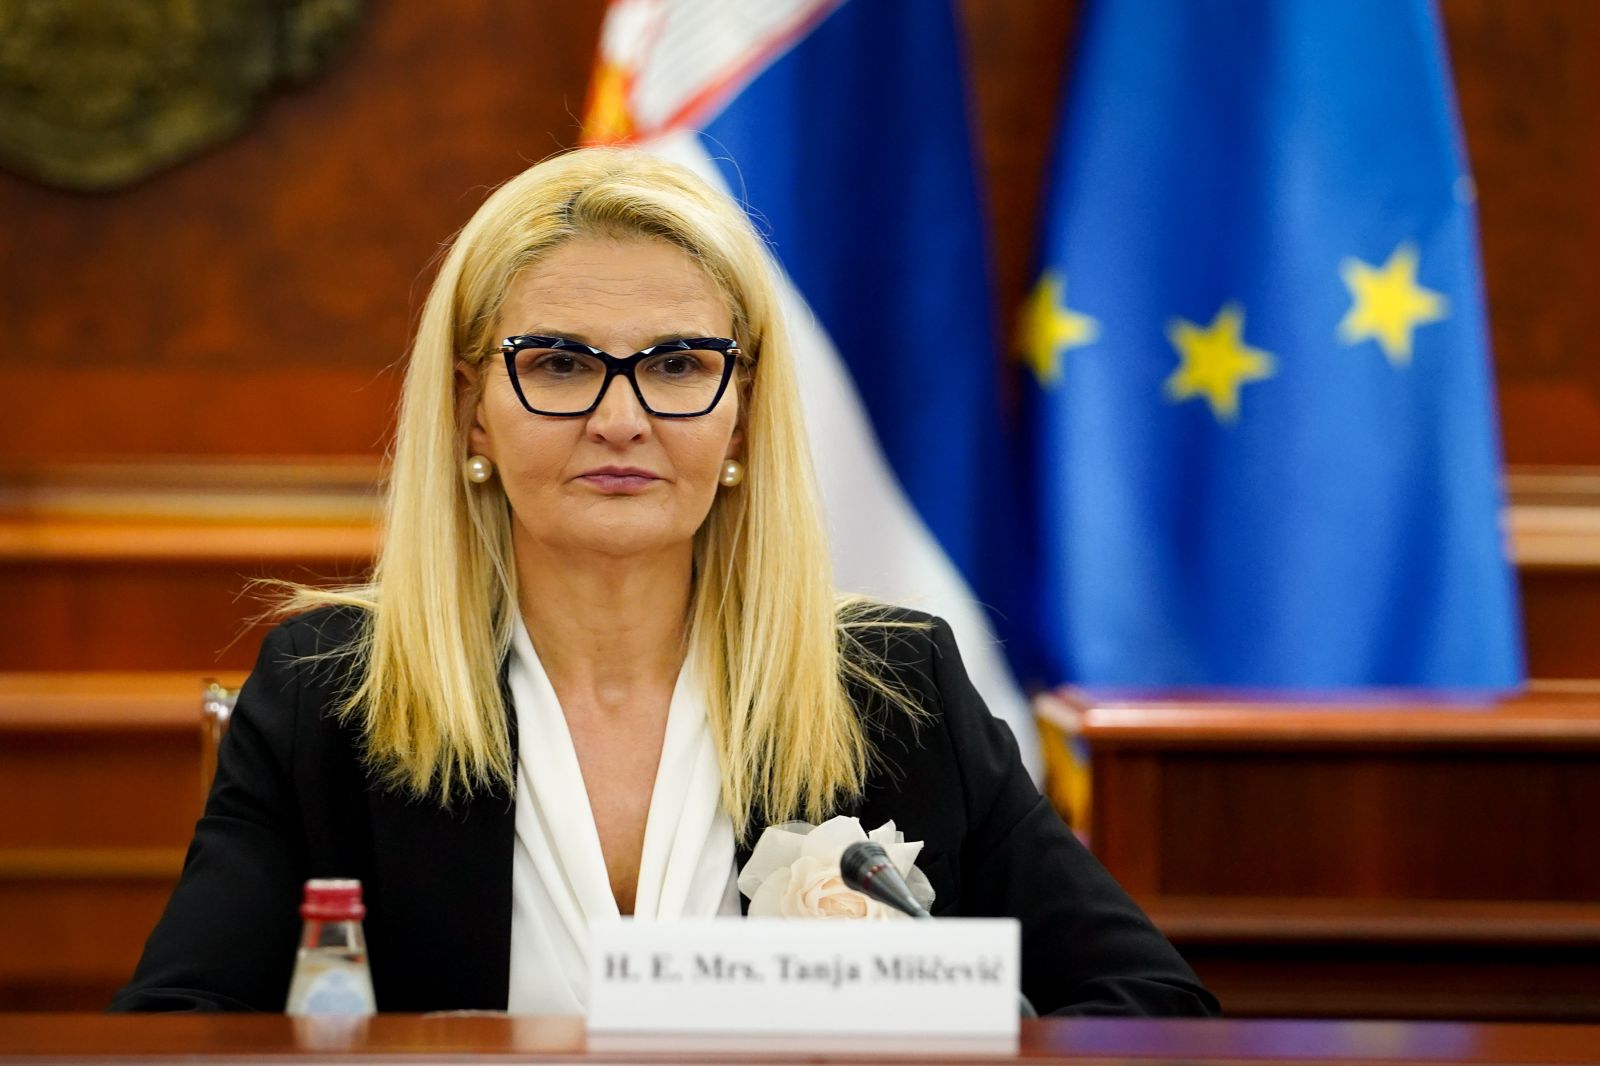 Miščević: No discrimination of citizens